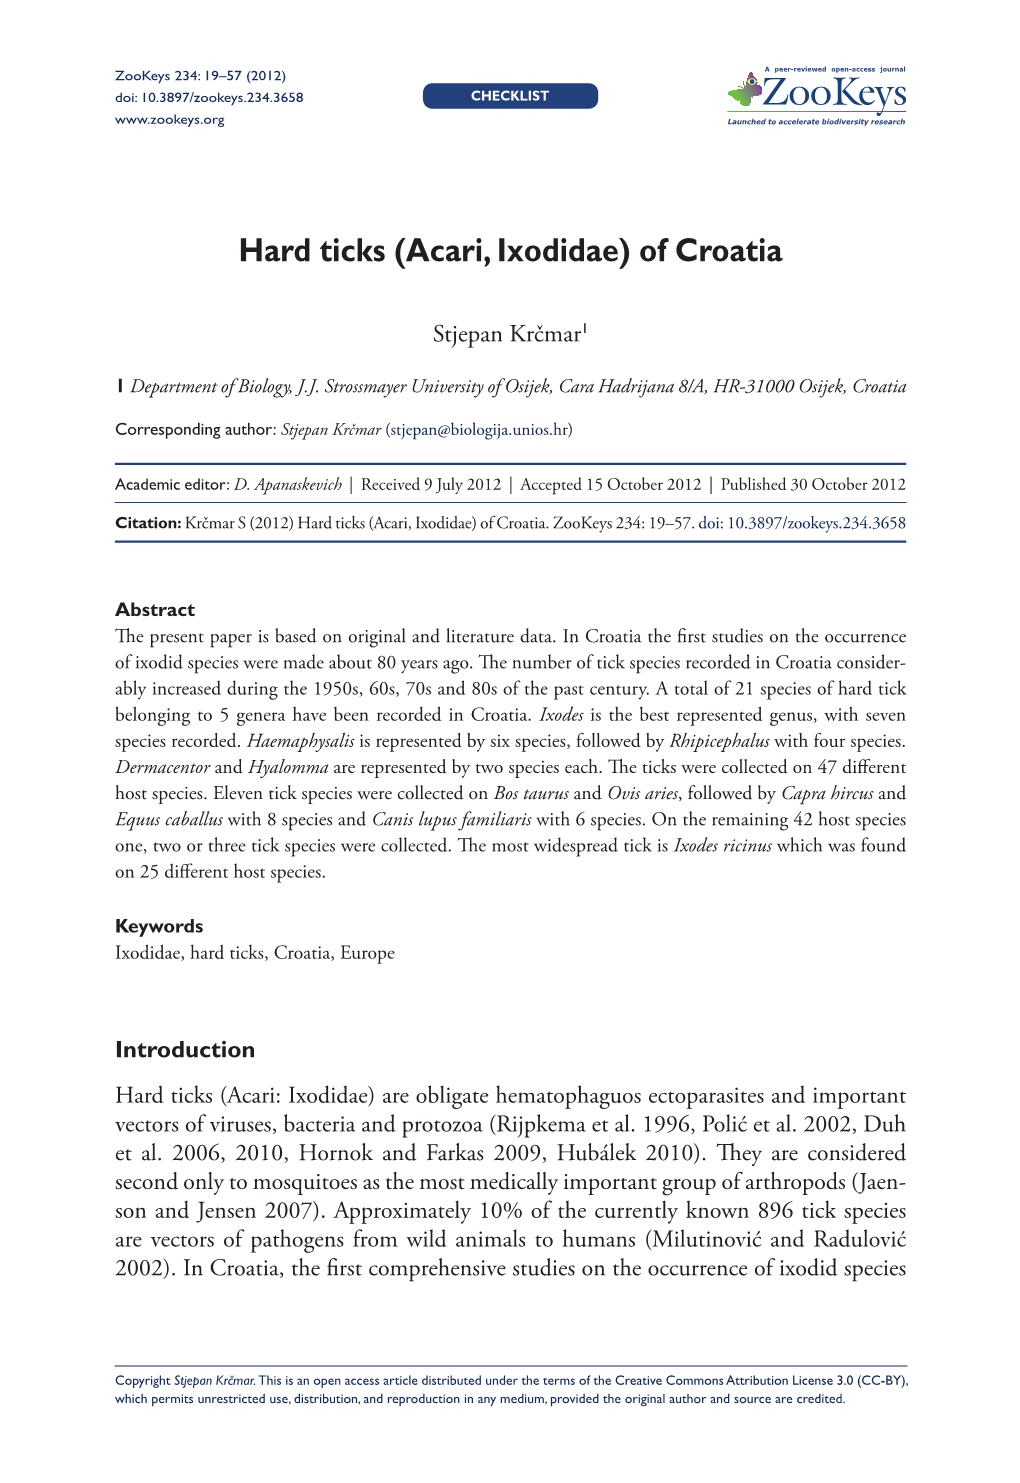 Hard Ticks (Acari, Ixodidae) of Croatia 19 Doi: 10.3897/Zookeys.234.3658 Checklist Launched to Accelerate Biodiversity Research